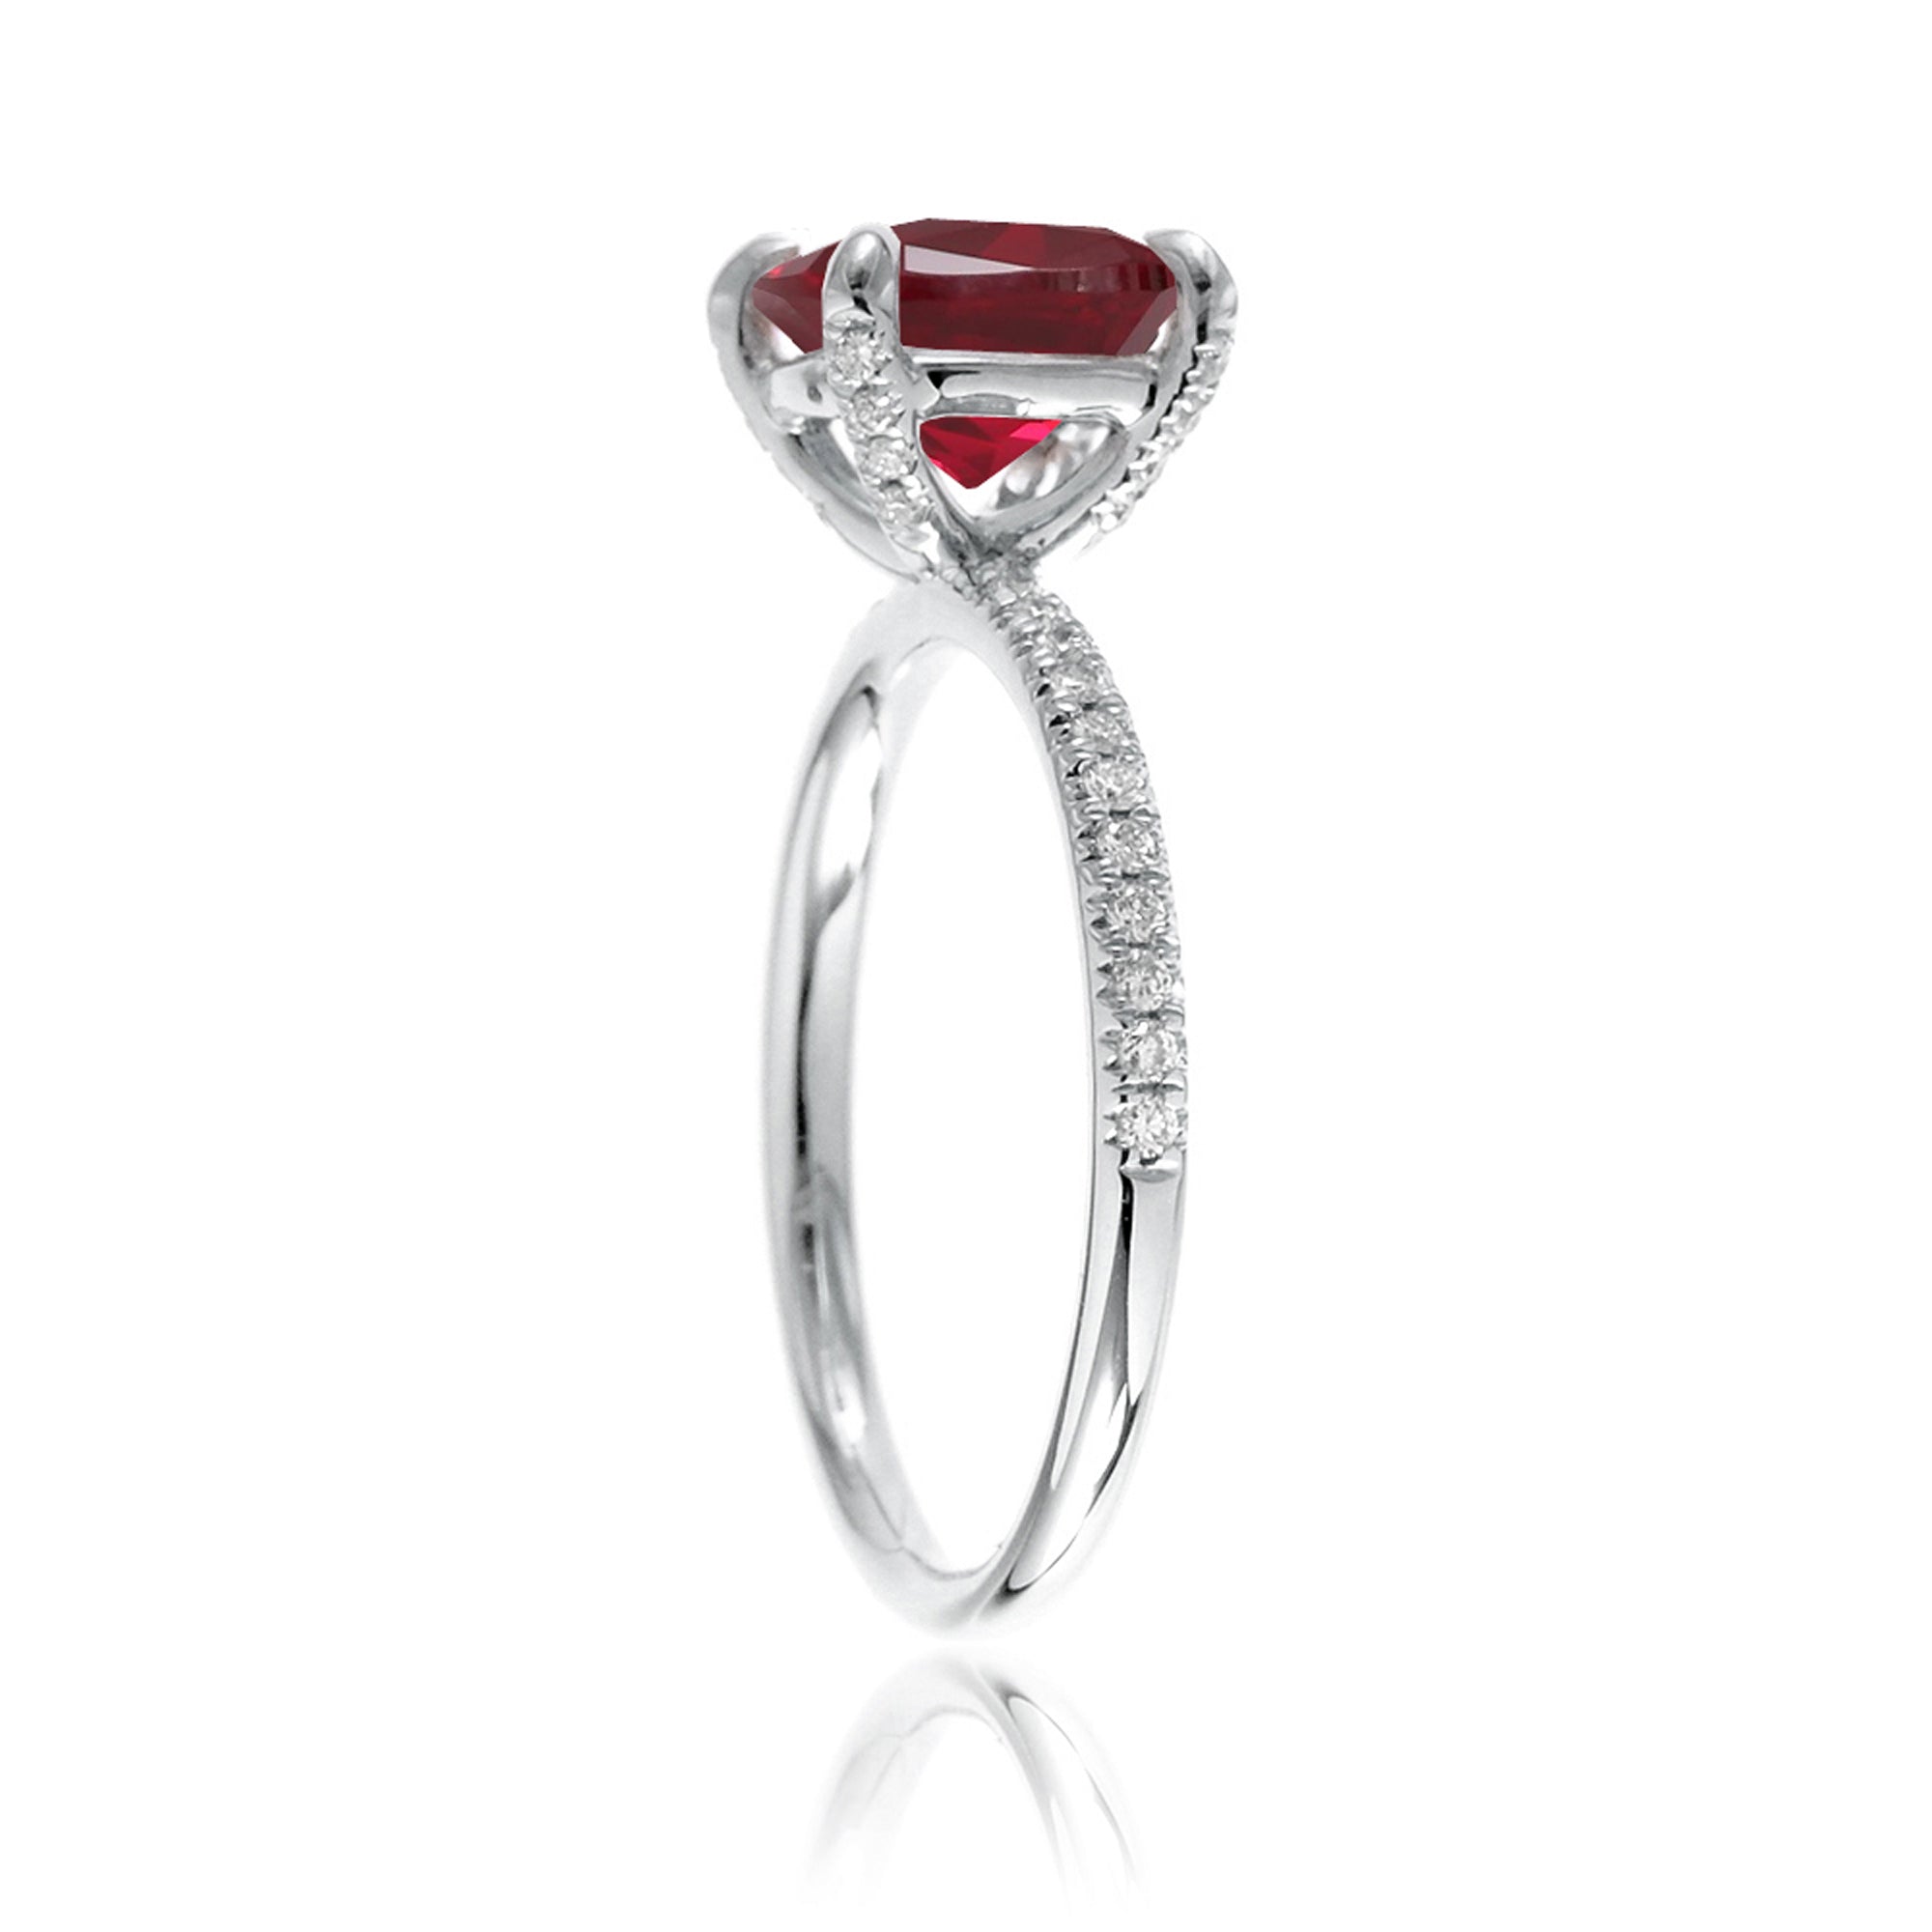 Cushion cut ruby diamond engagement ring white gold - the Ava